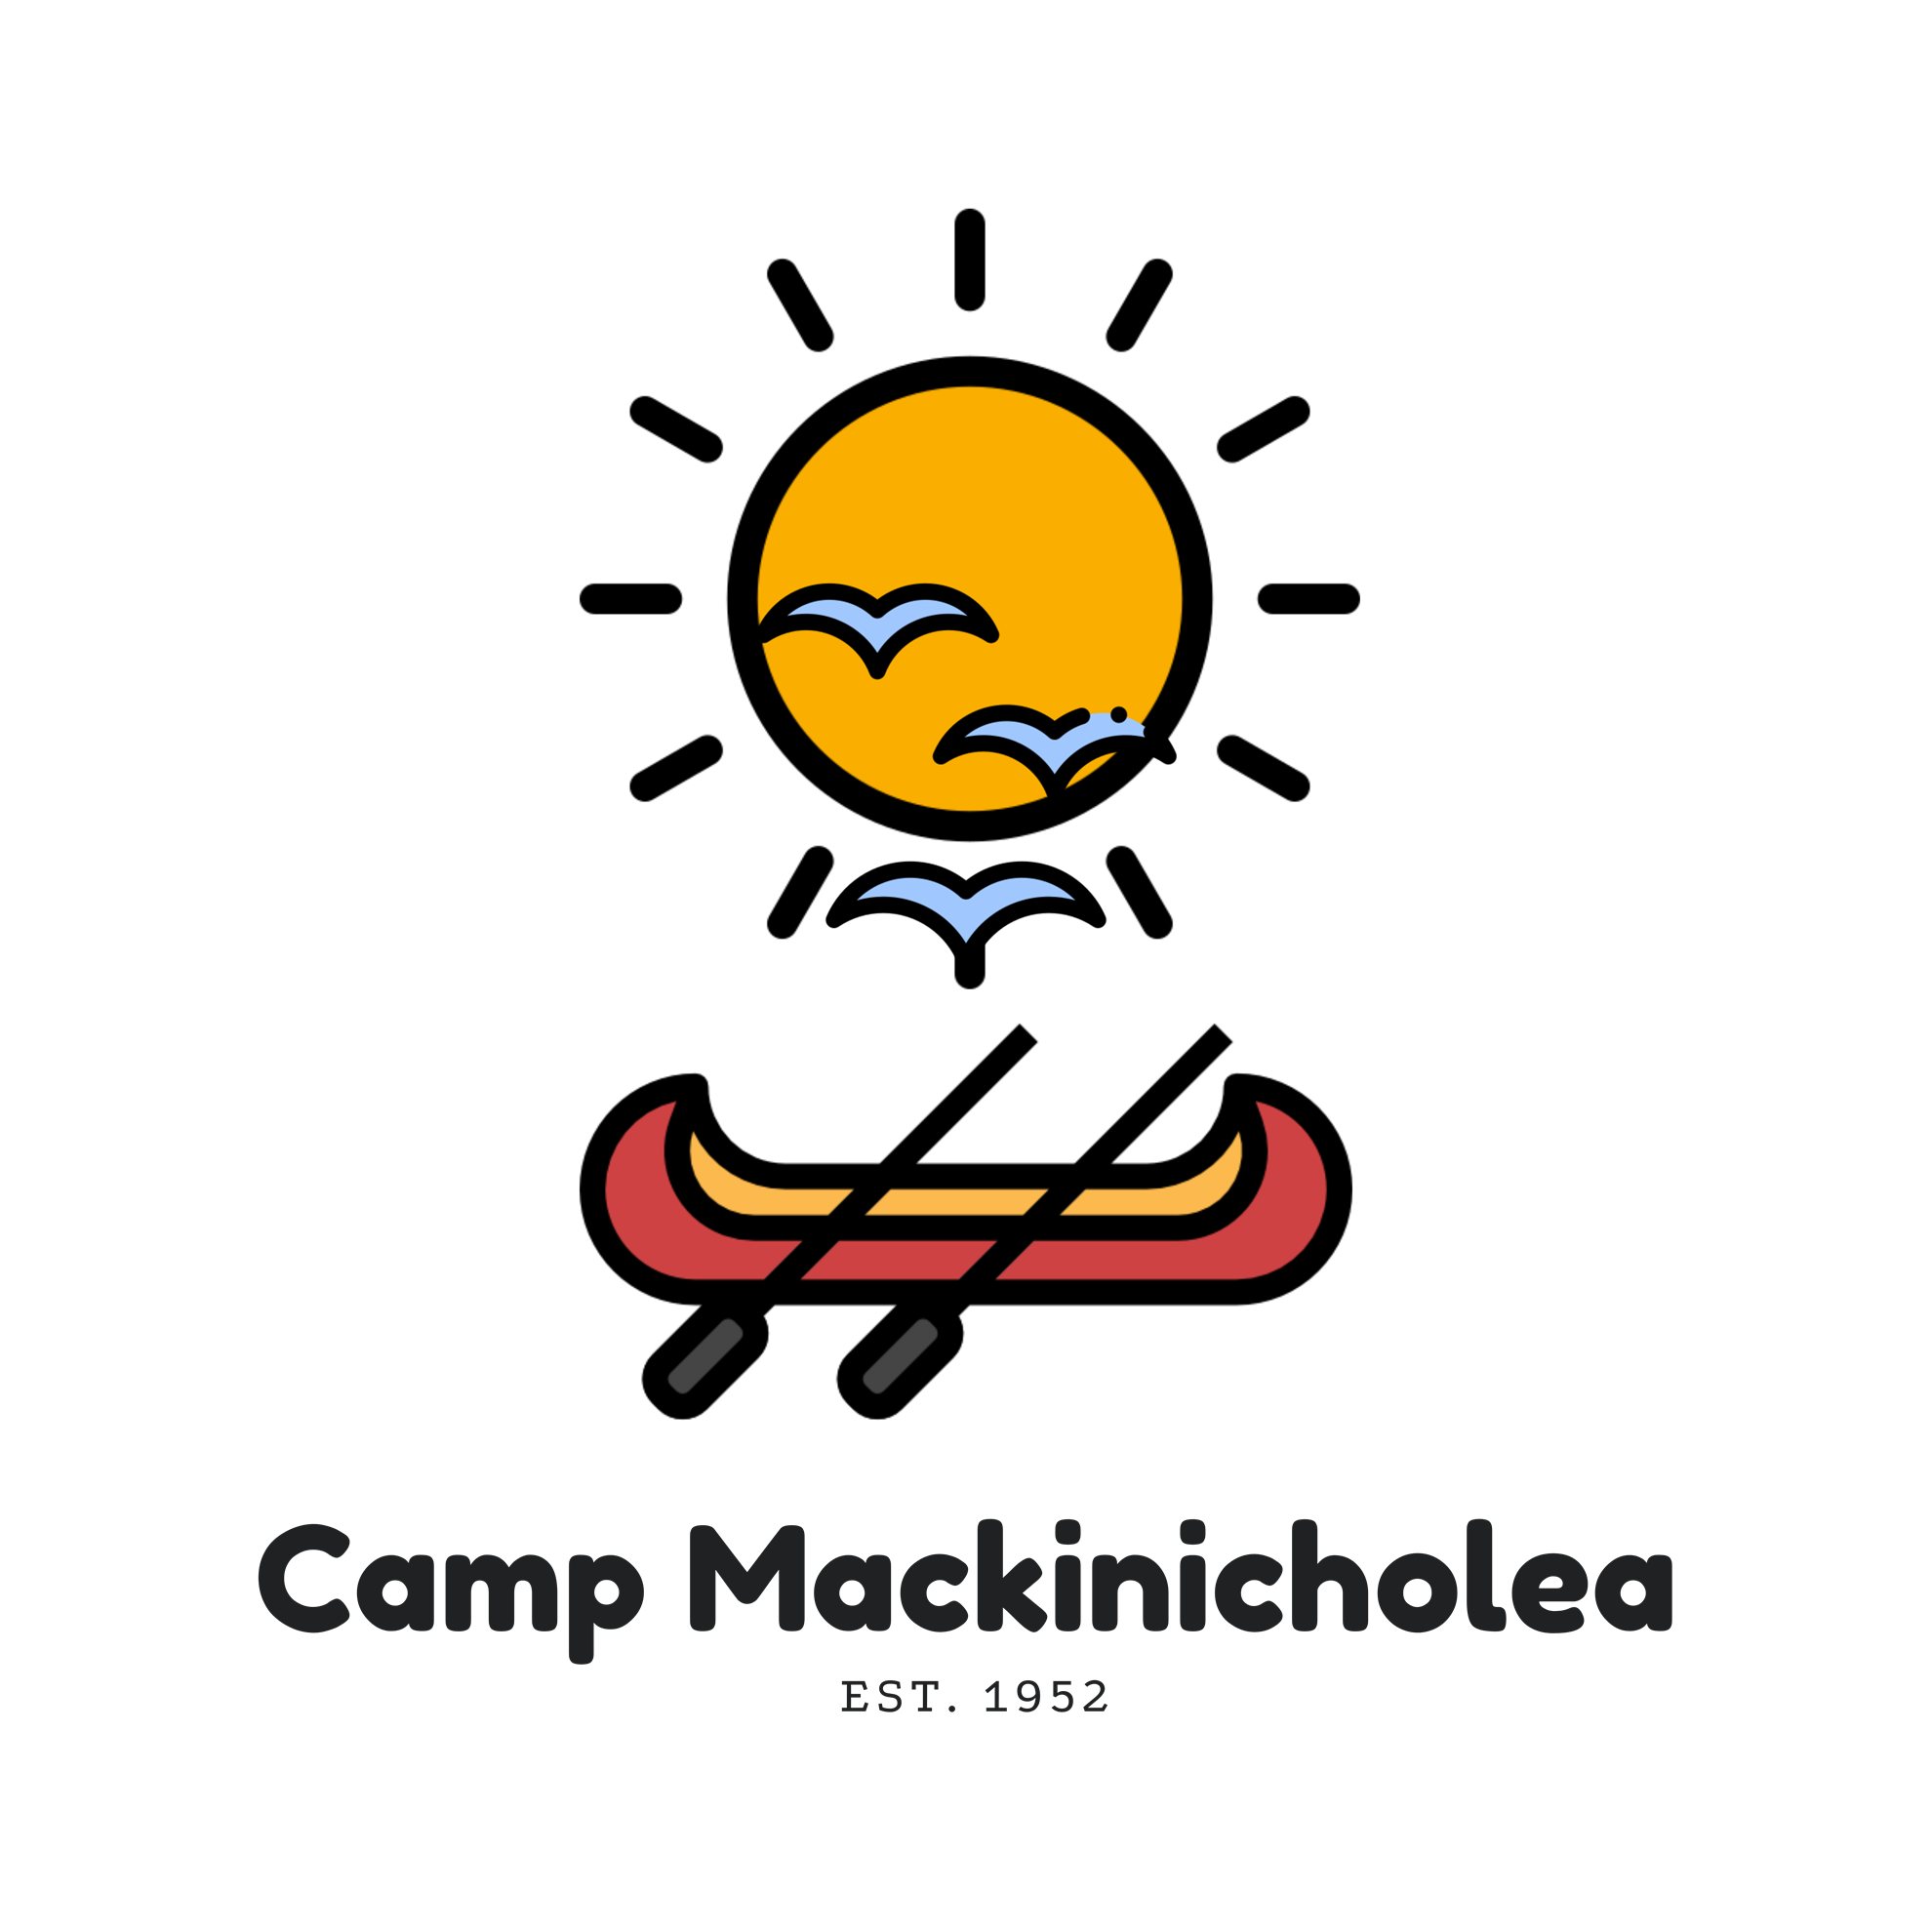 Camp Mackinicholea logo